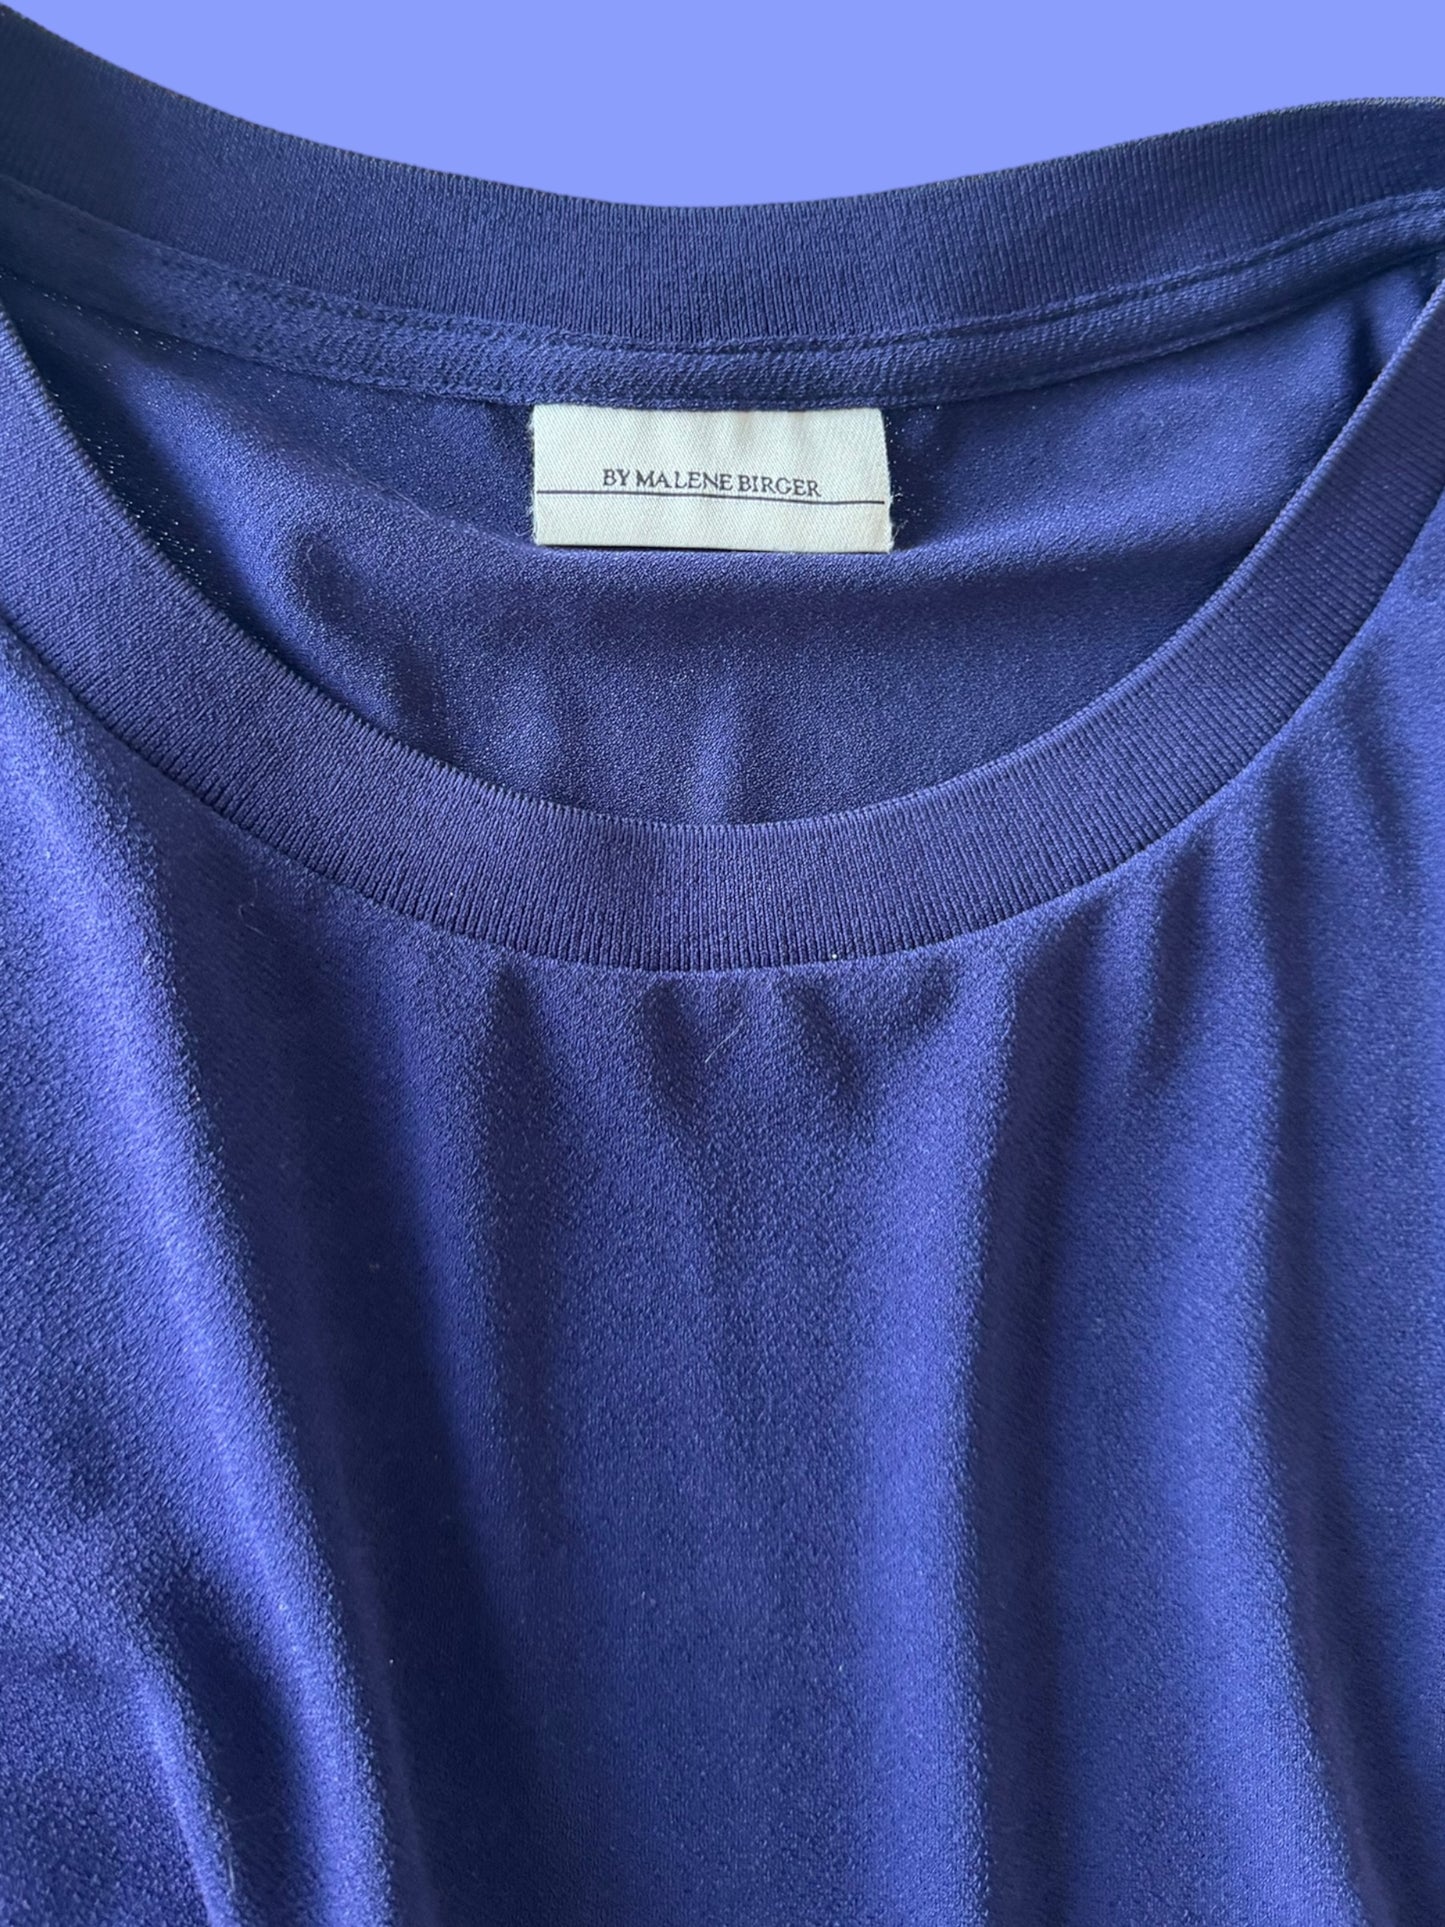 MALENE BIRGER blue dress size medium